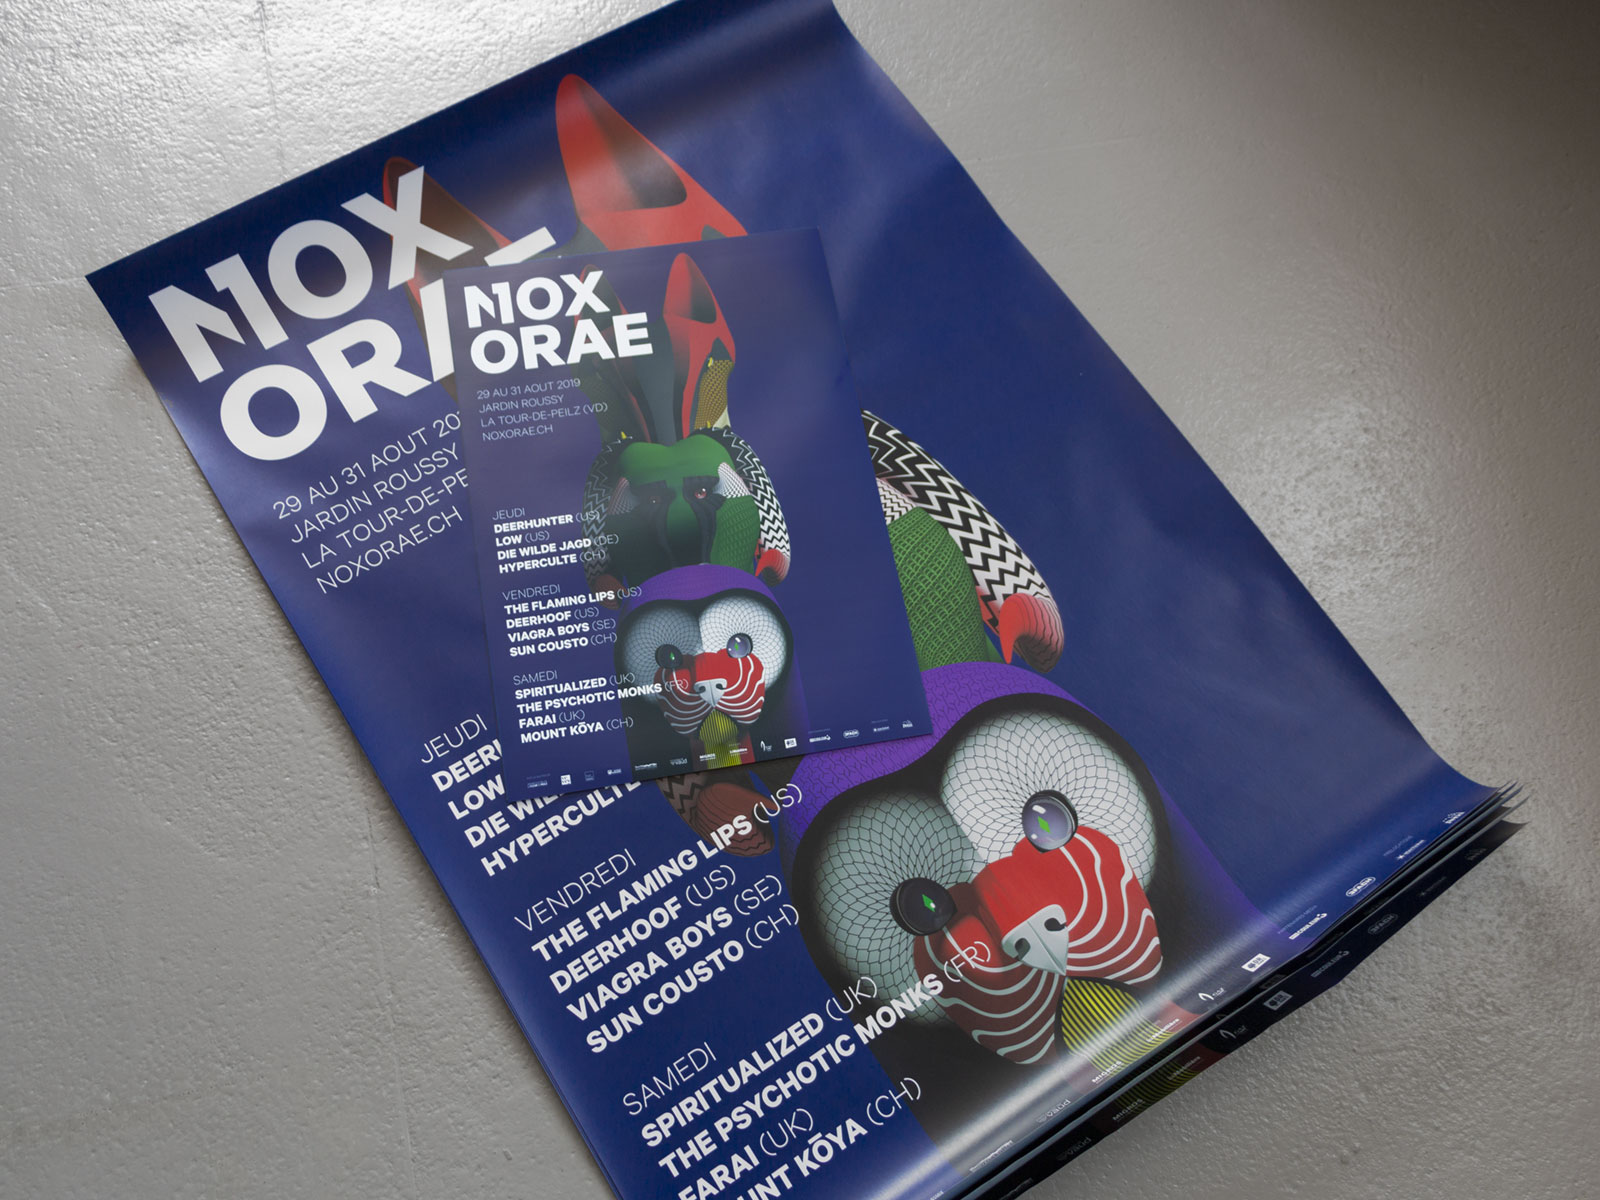 Nox Orae 2019, affiches F4 et A2 | © AG